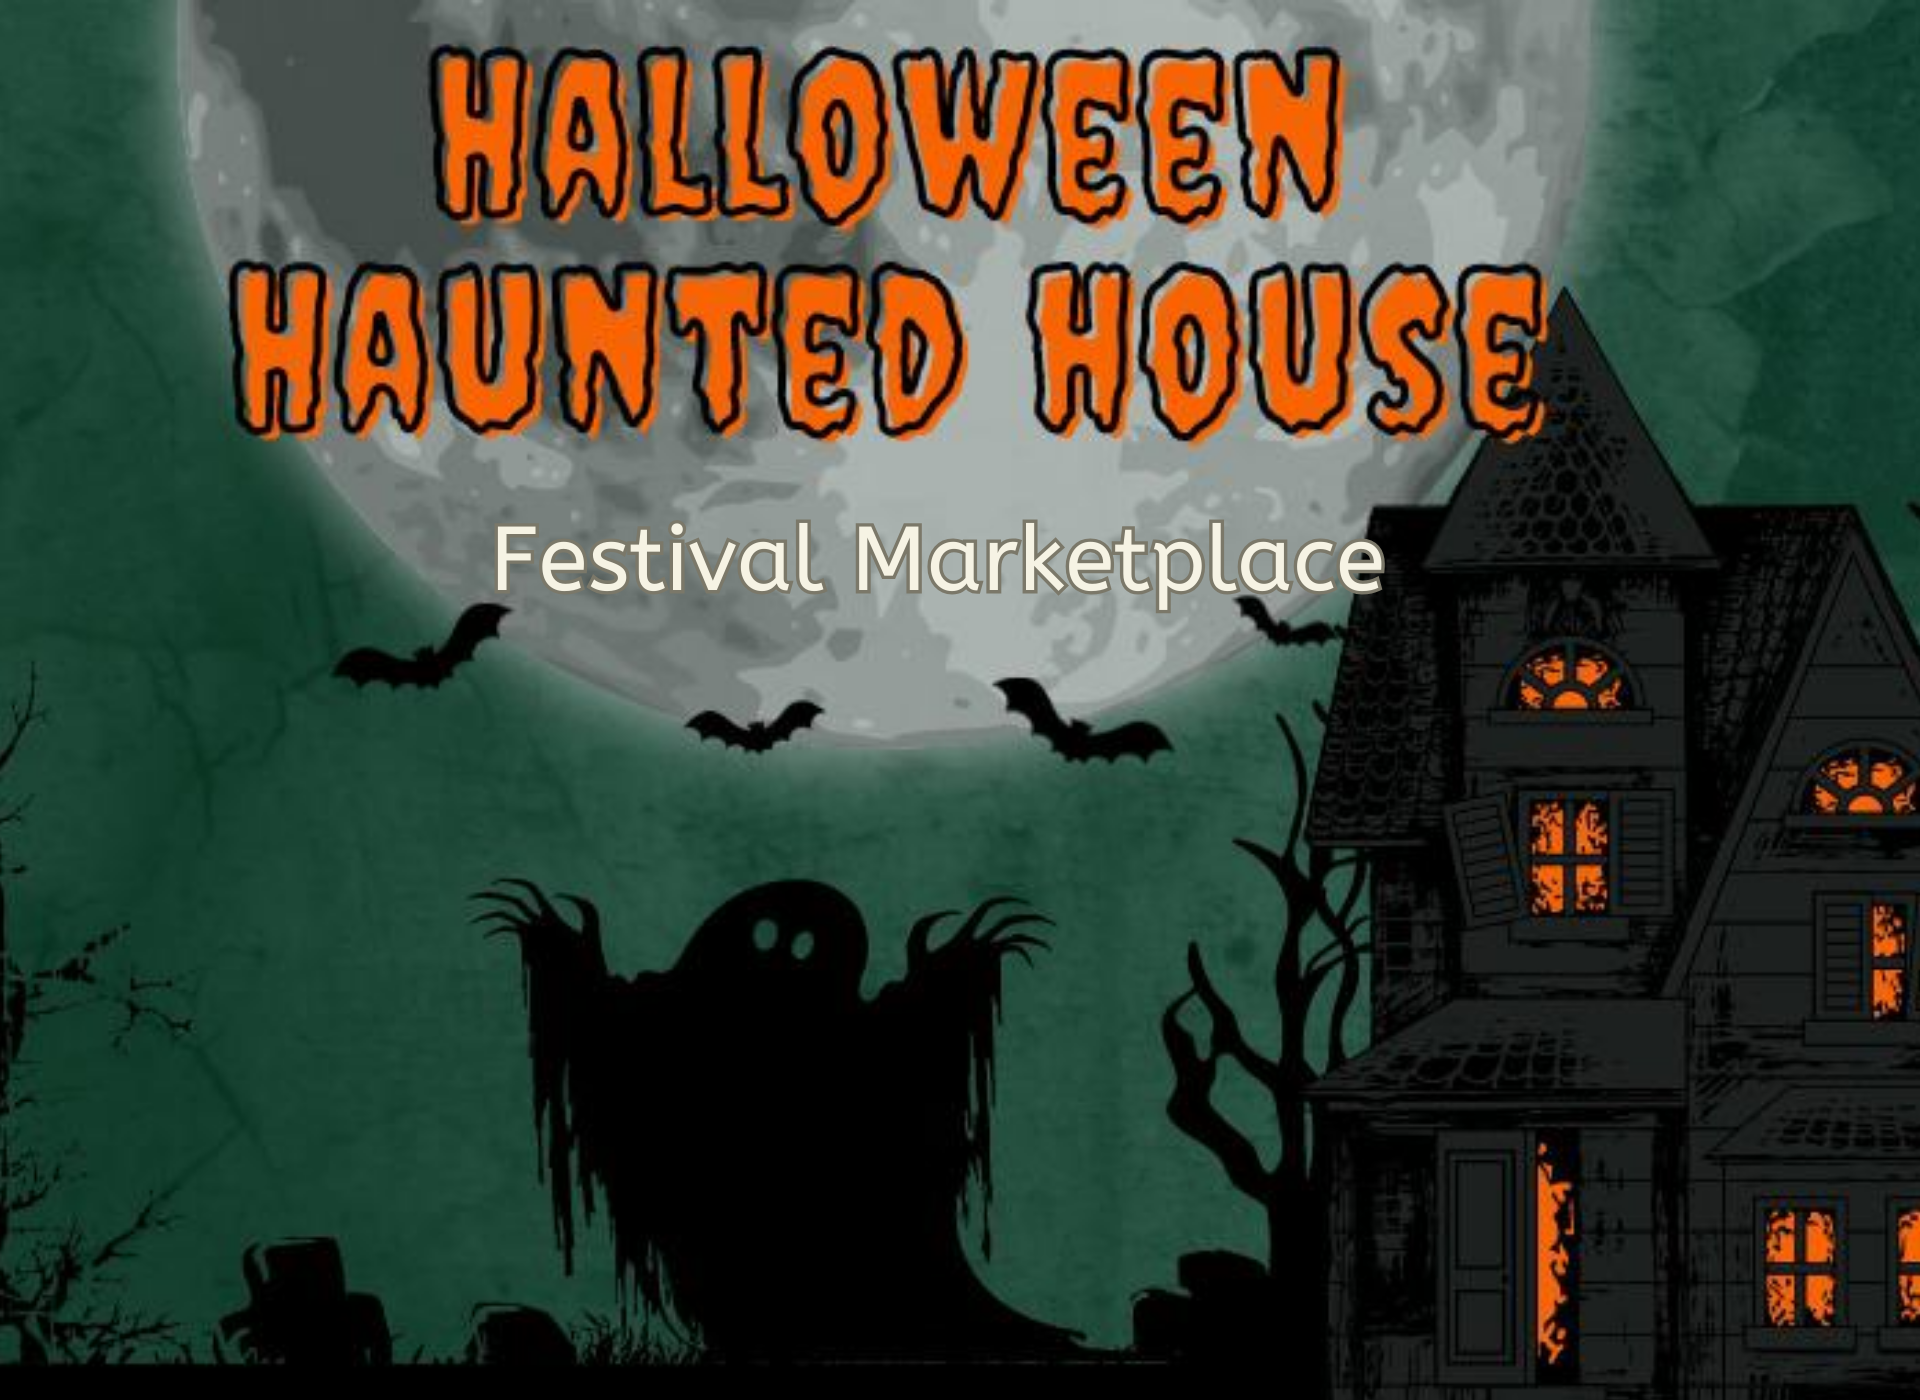 Festival Marketplace - Halloween